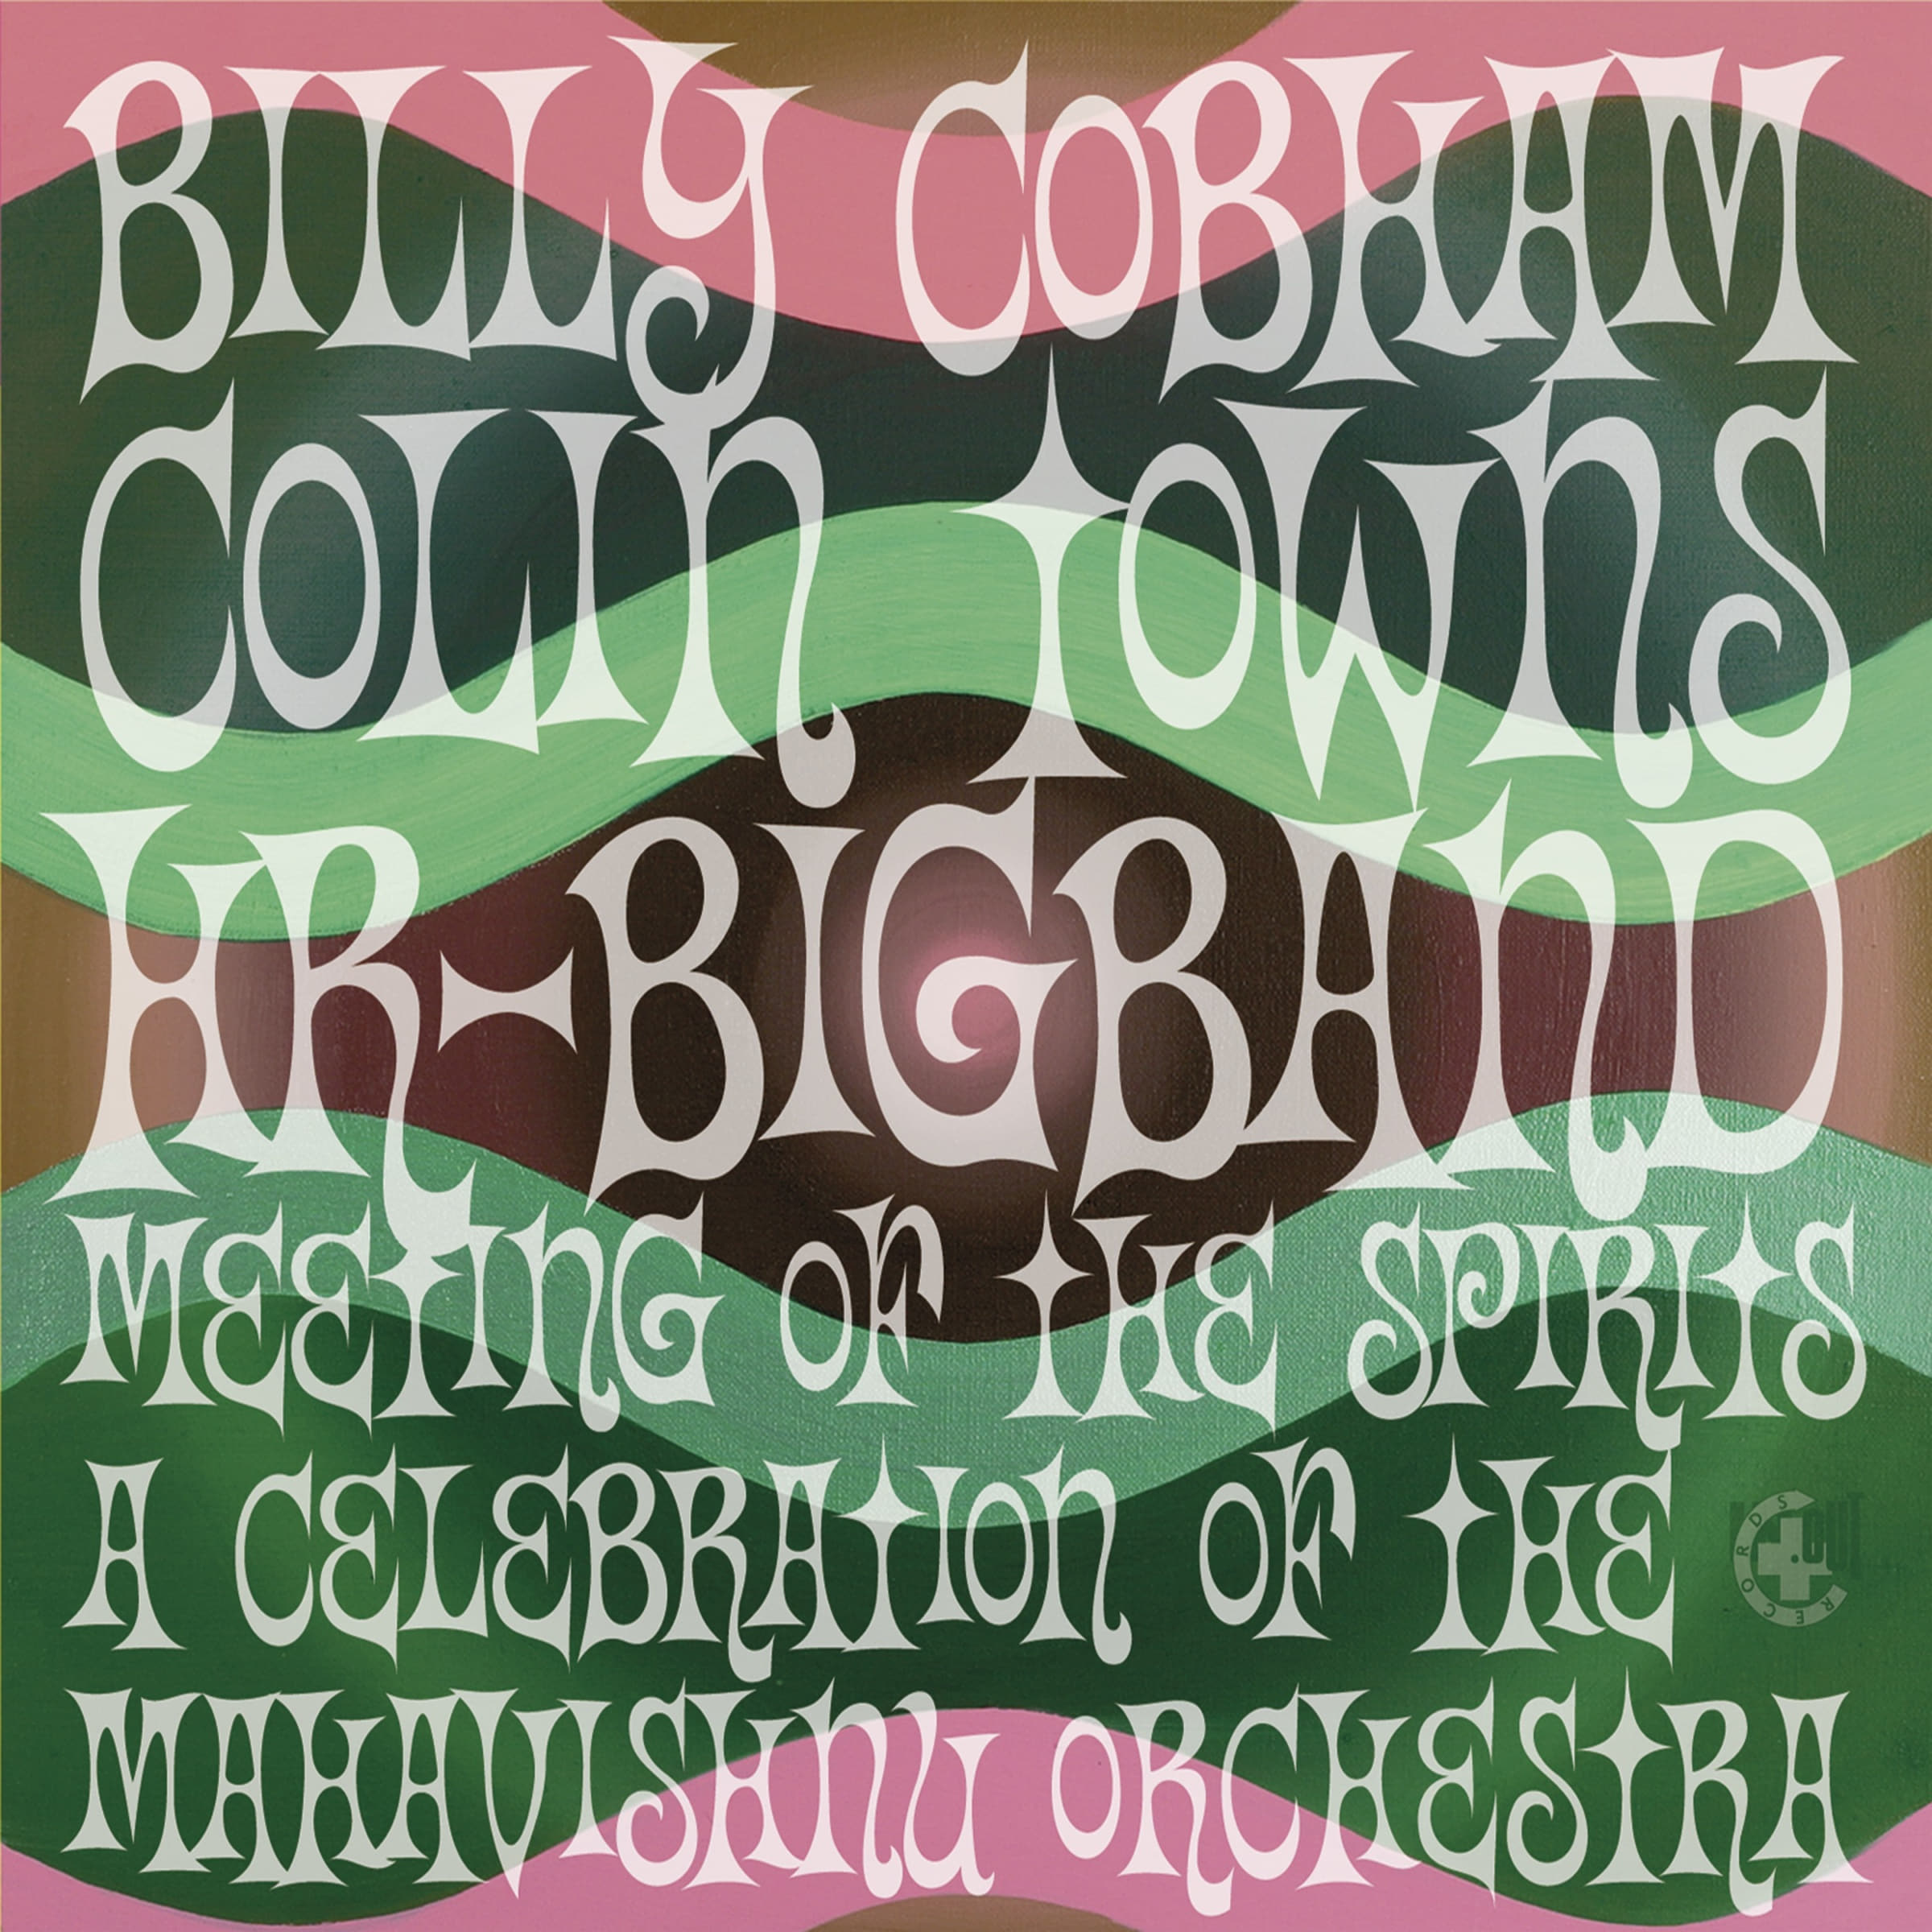 Billy Cobham, Colin Towns &amp; hr-Bigband-Sanctuary